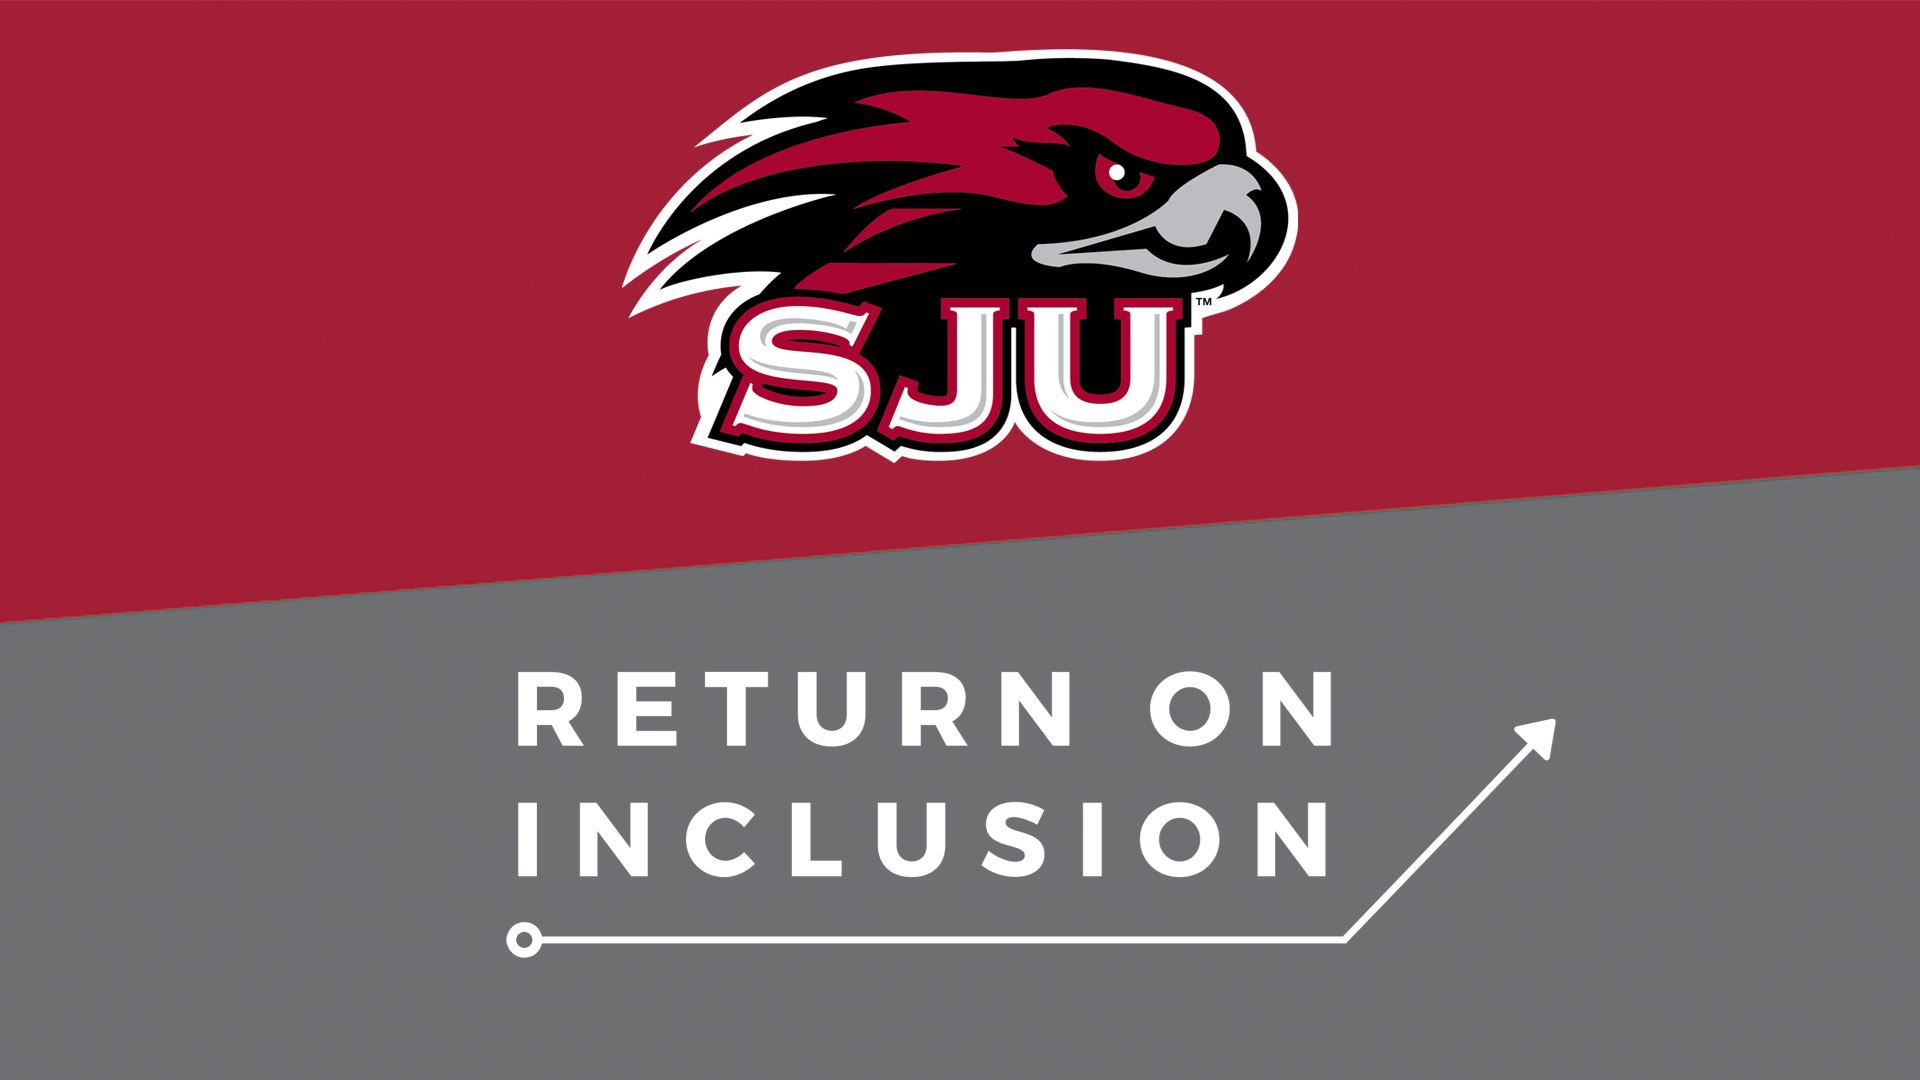 Saint Joseph's University's Hawk logo and the words Return on Inclusion below it